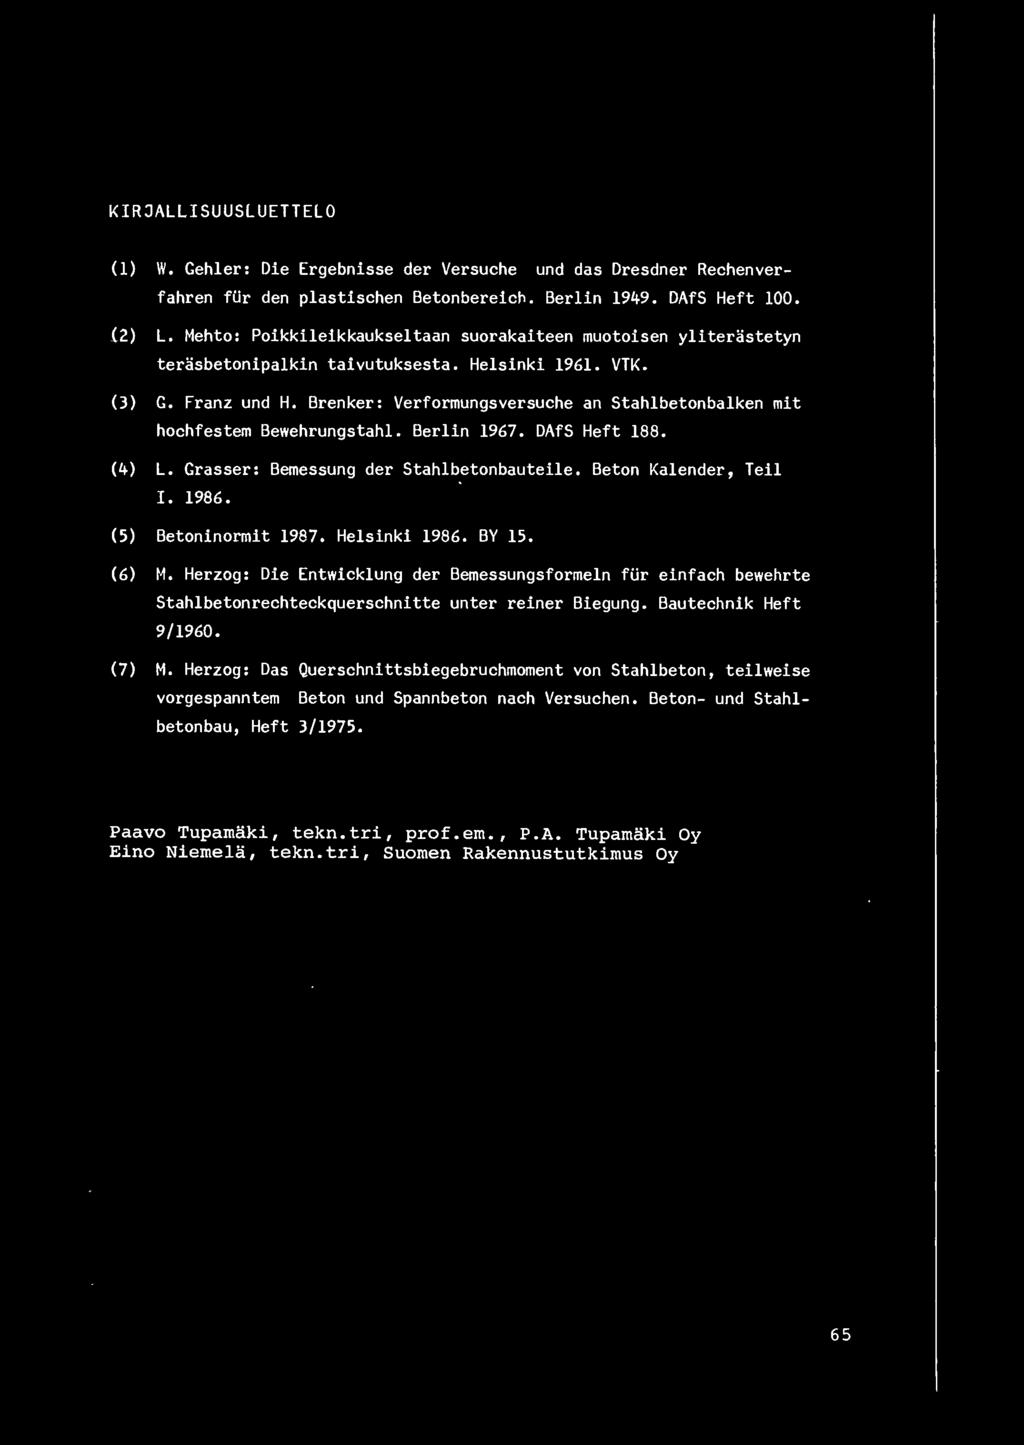 Brenker: Verformungsversuhe an Stahlbetonbalken mit hohfestem Bewehrungstahl. Berlin 1967. OAfS Heft 188. (4) L. Grasser: Bemessung der Stahlbetonbauteile. Beton Kalender, Teil I. 1986.